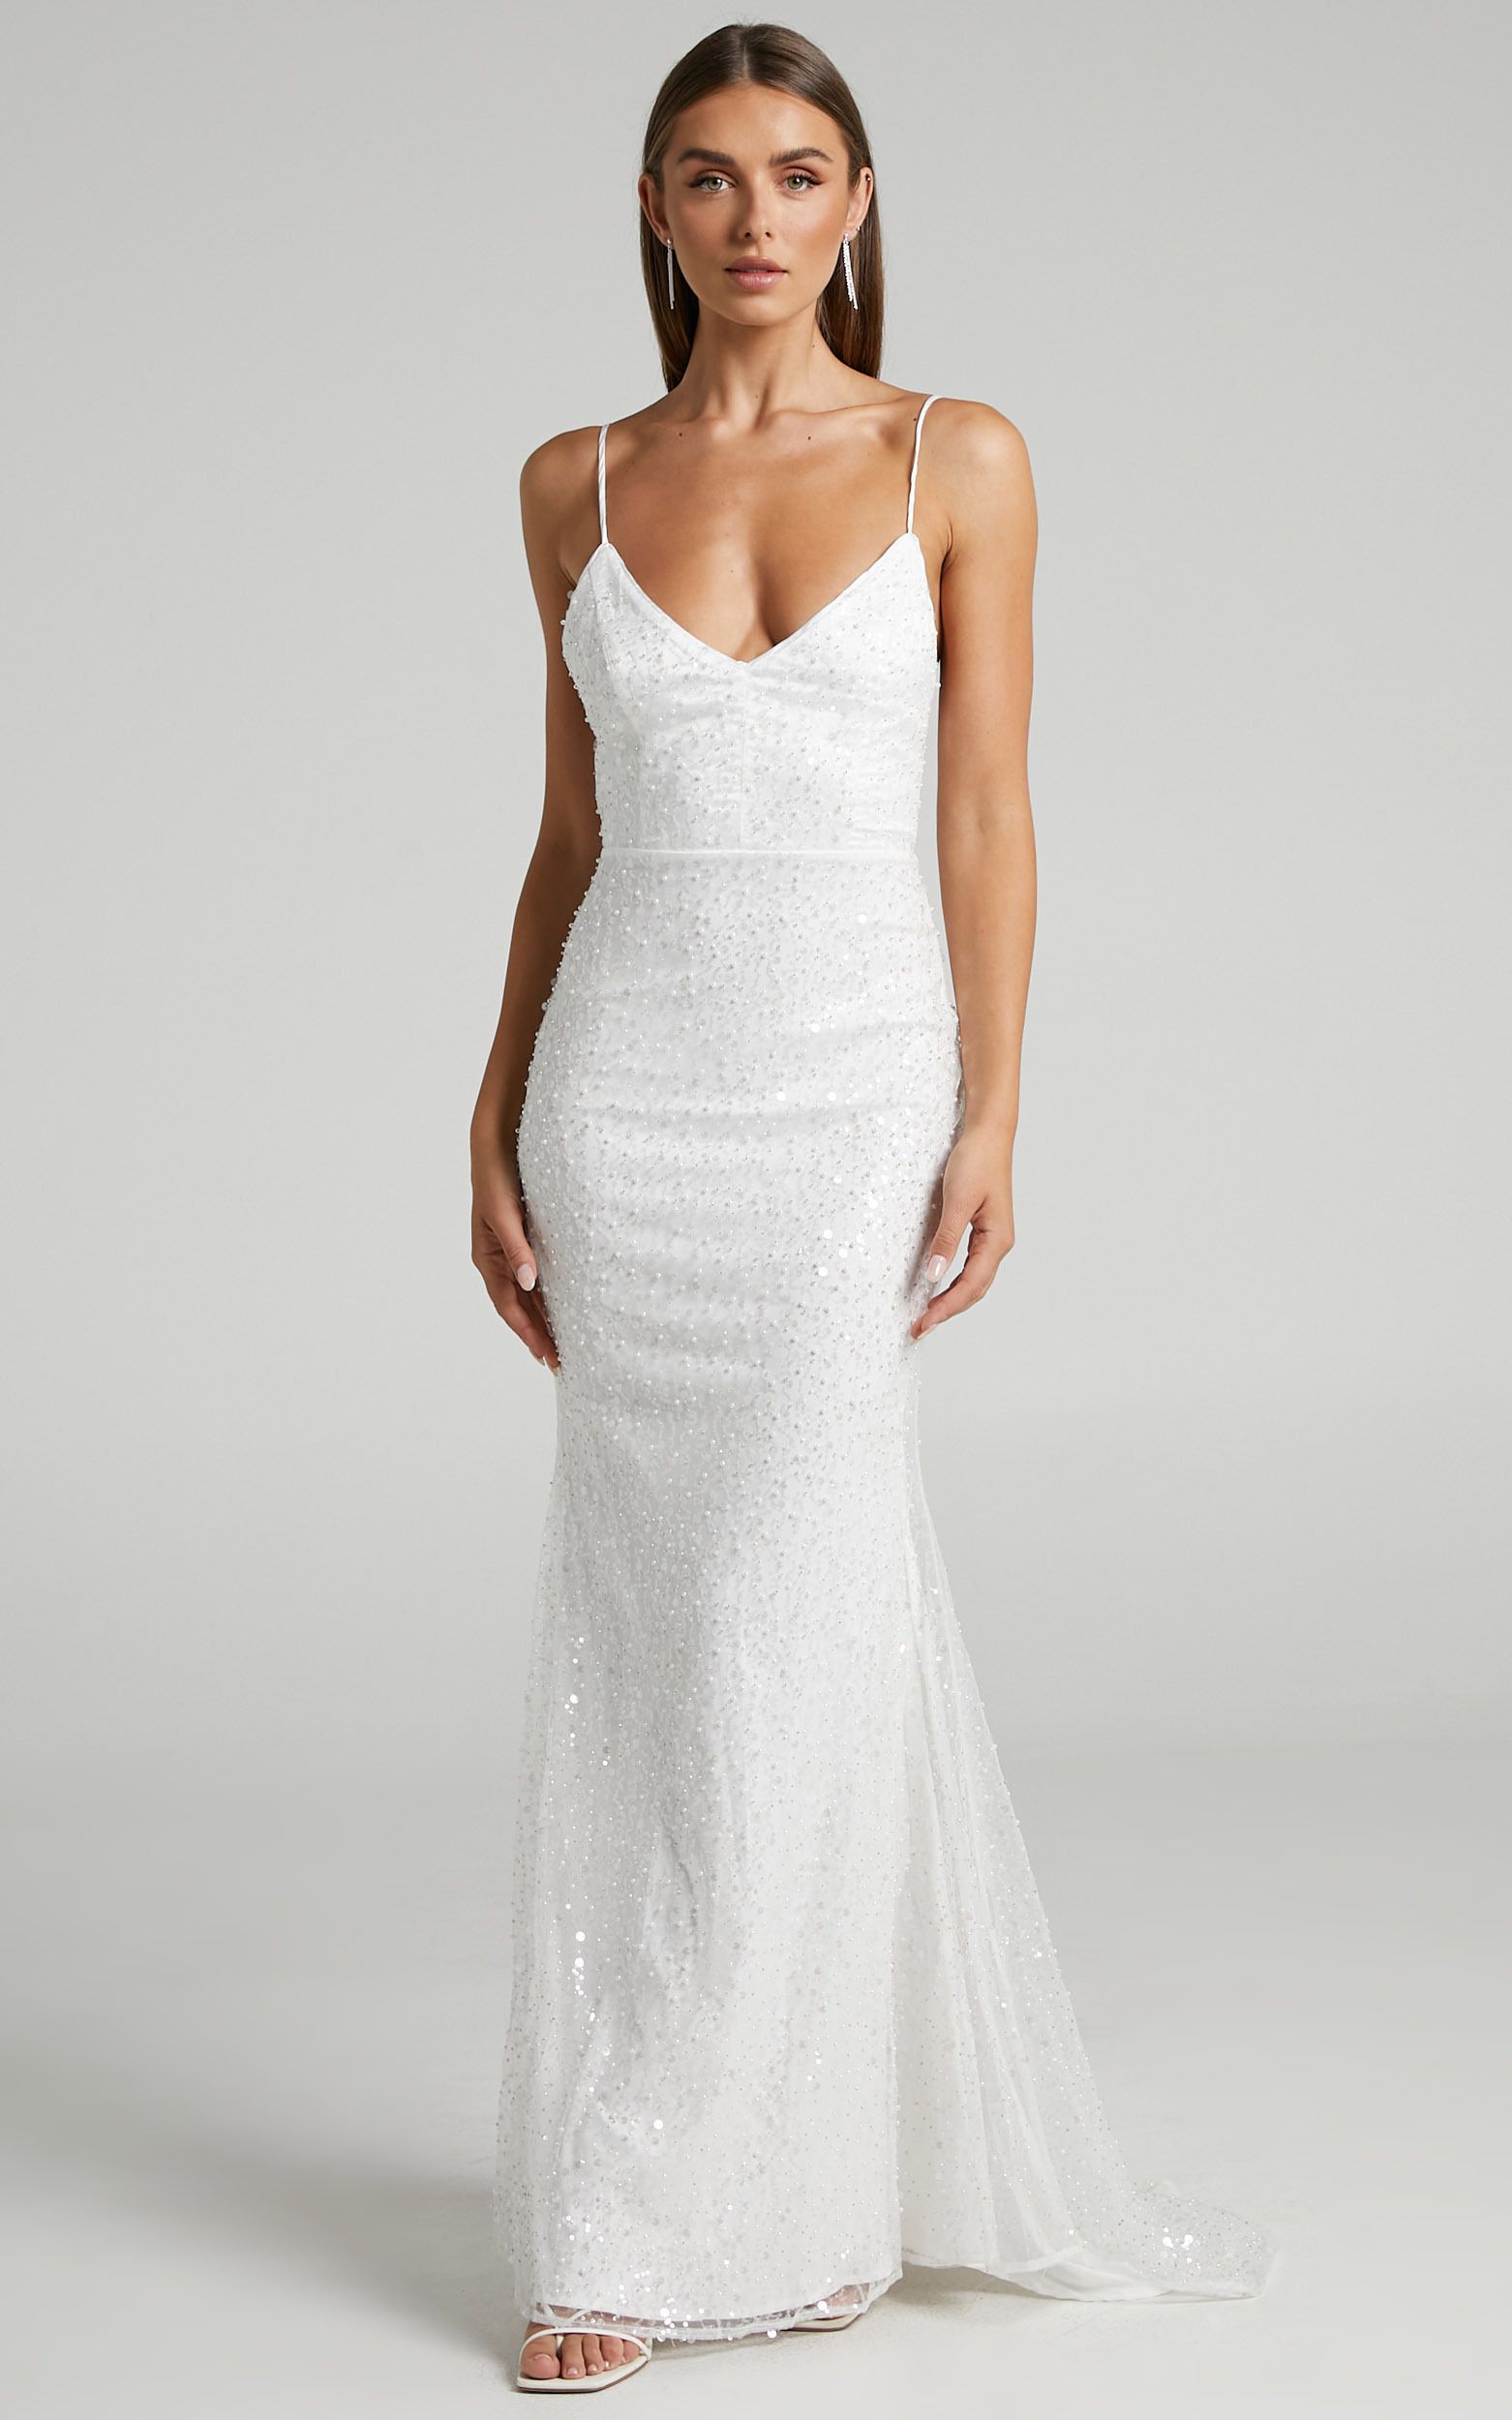 Leauna Bridal Gown - V Neck Embellished Tulle Gown in Ivory | Showpo (US, UK & Europe)